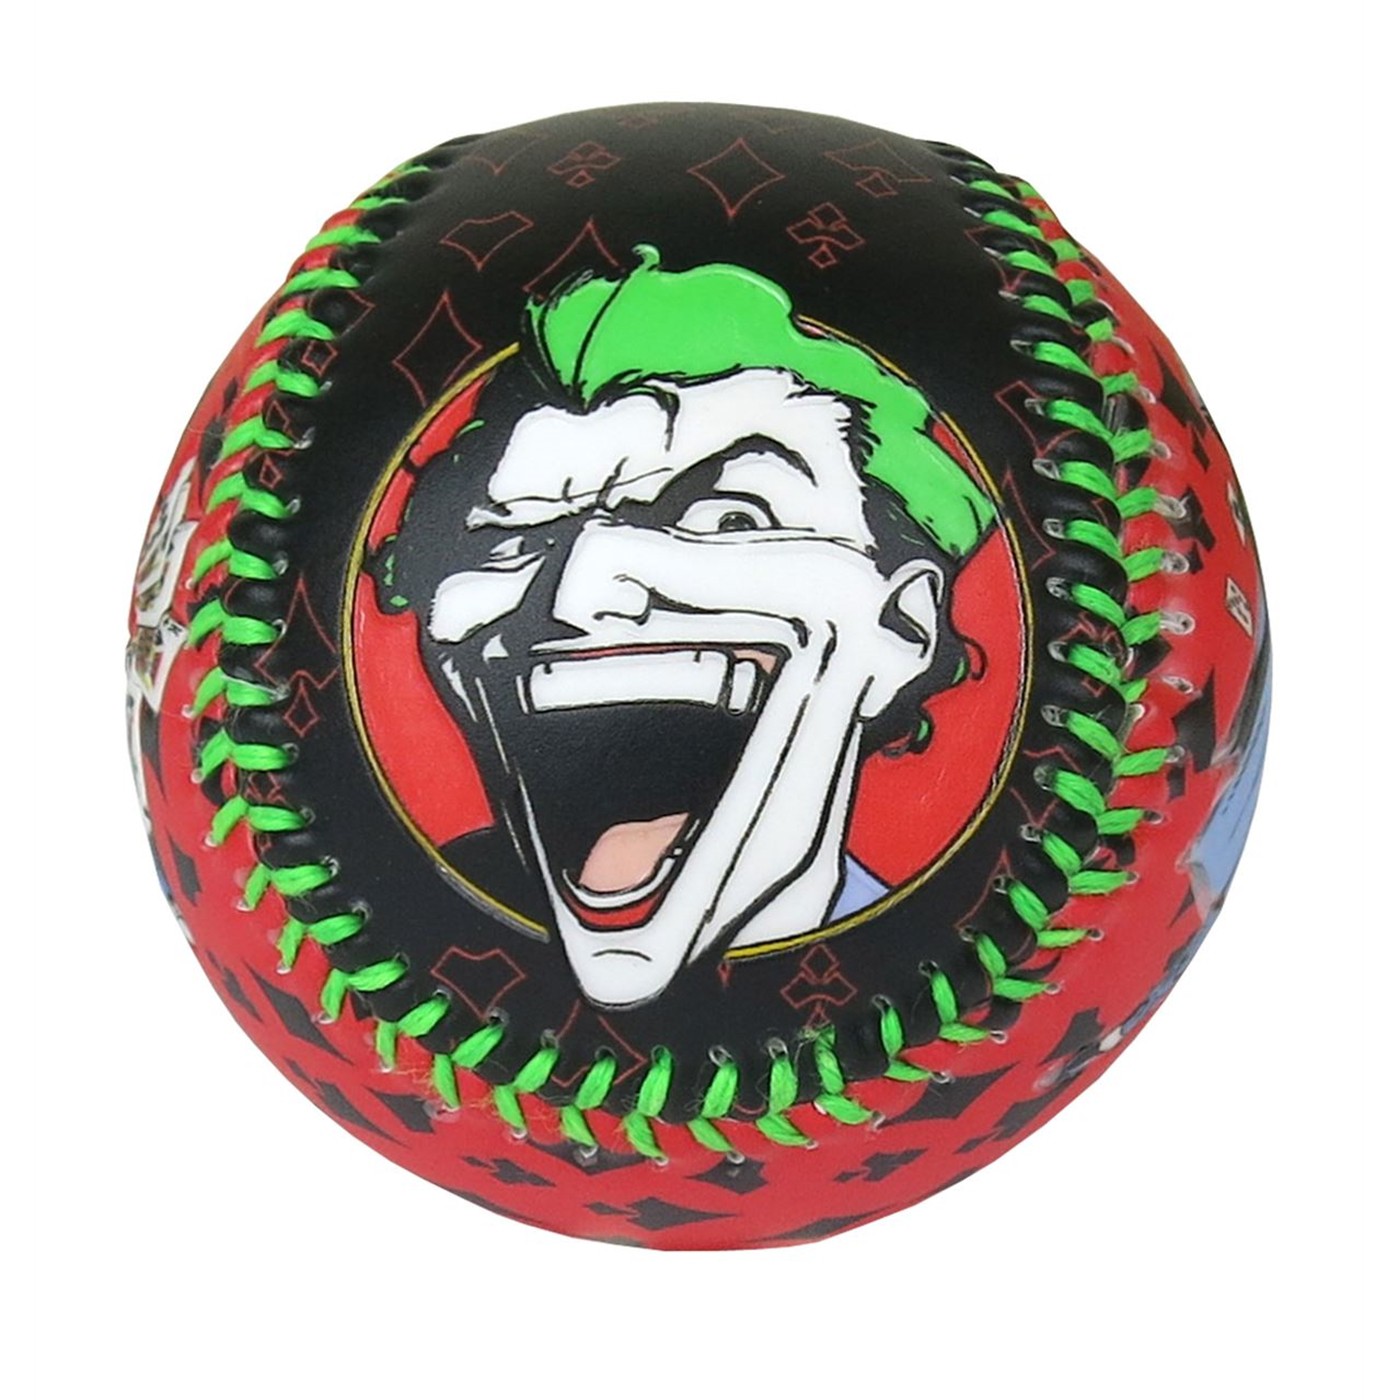 Joker Image Youth Baseball